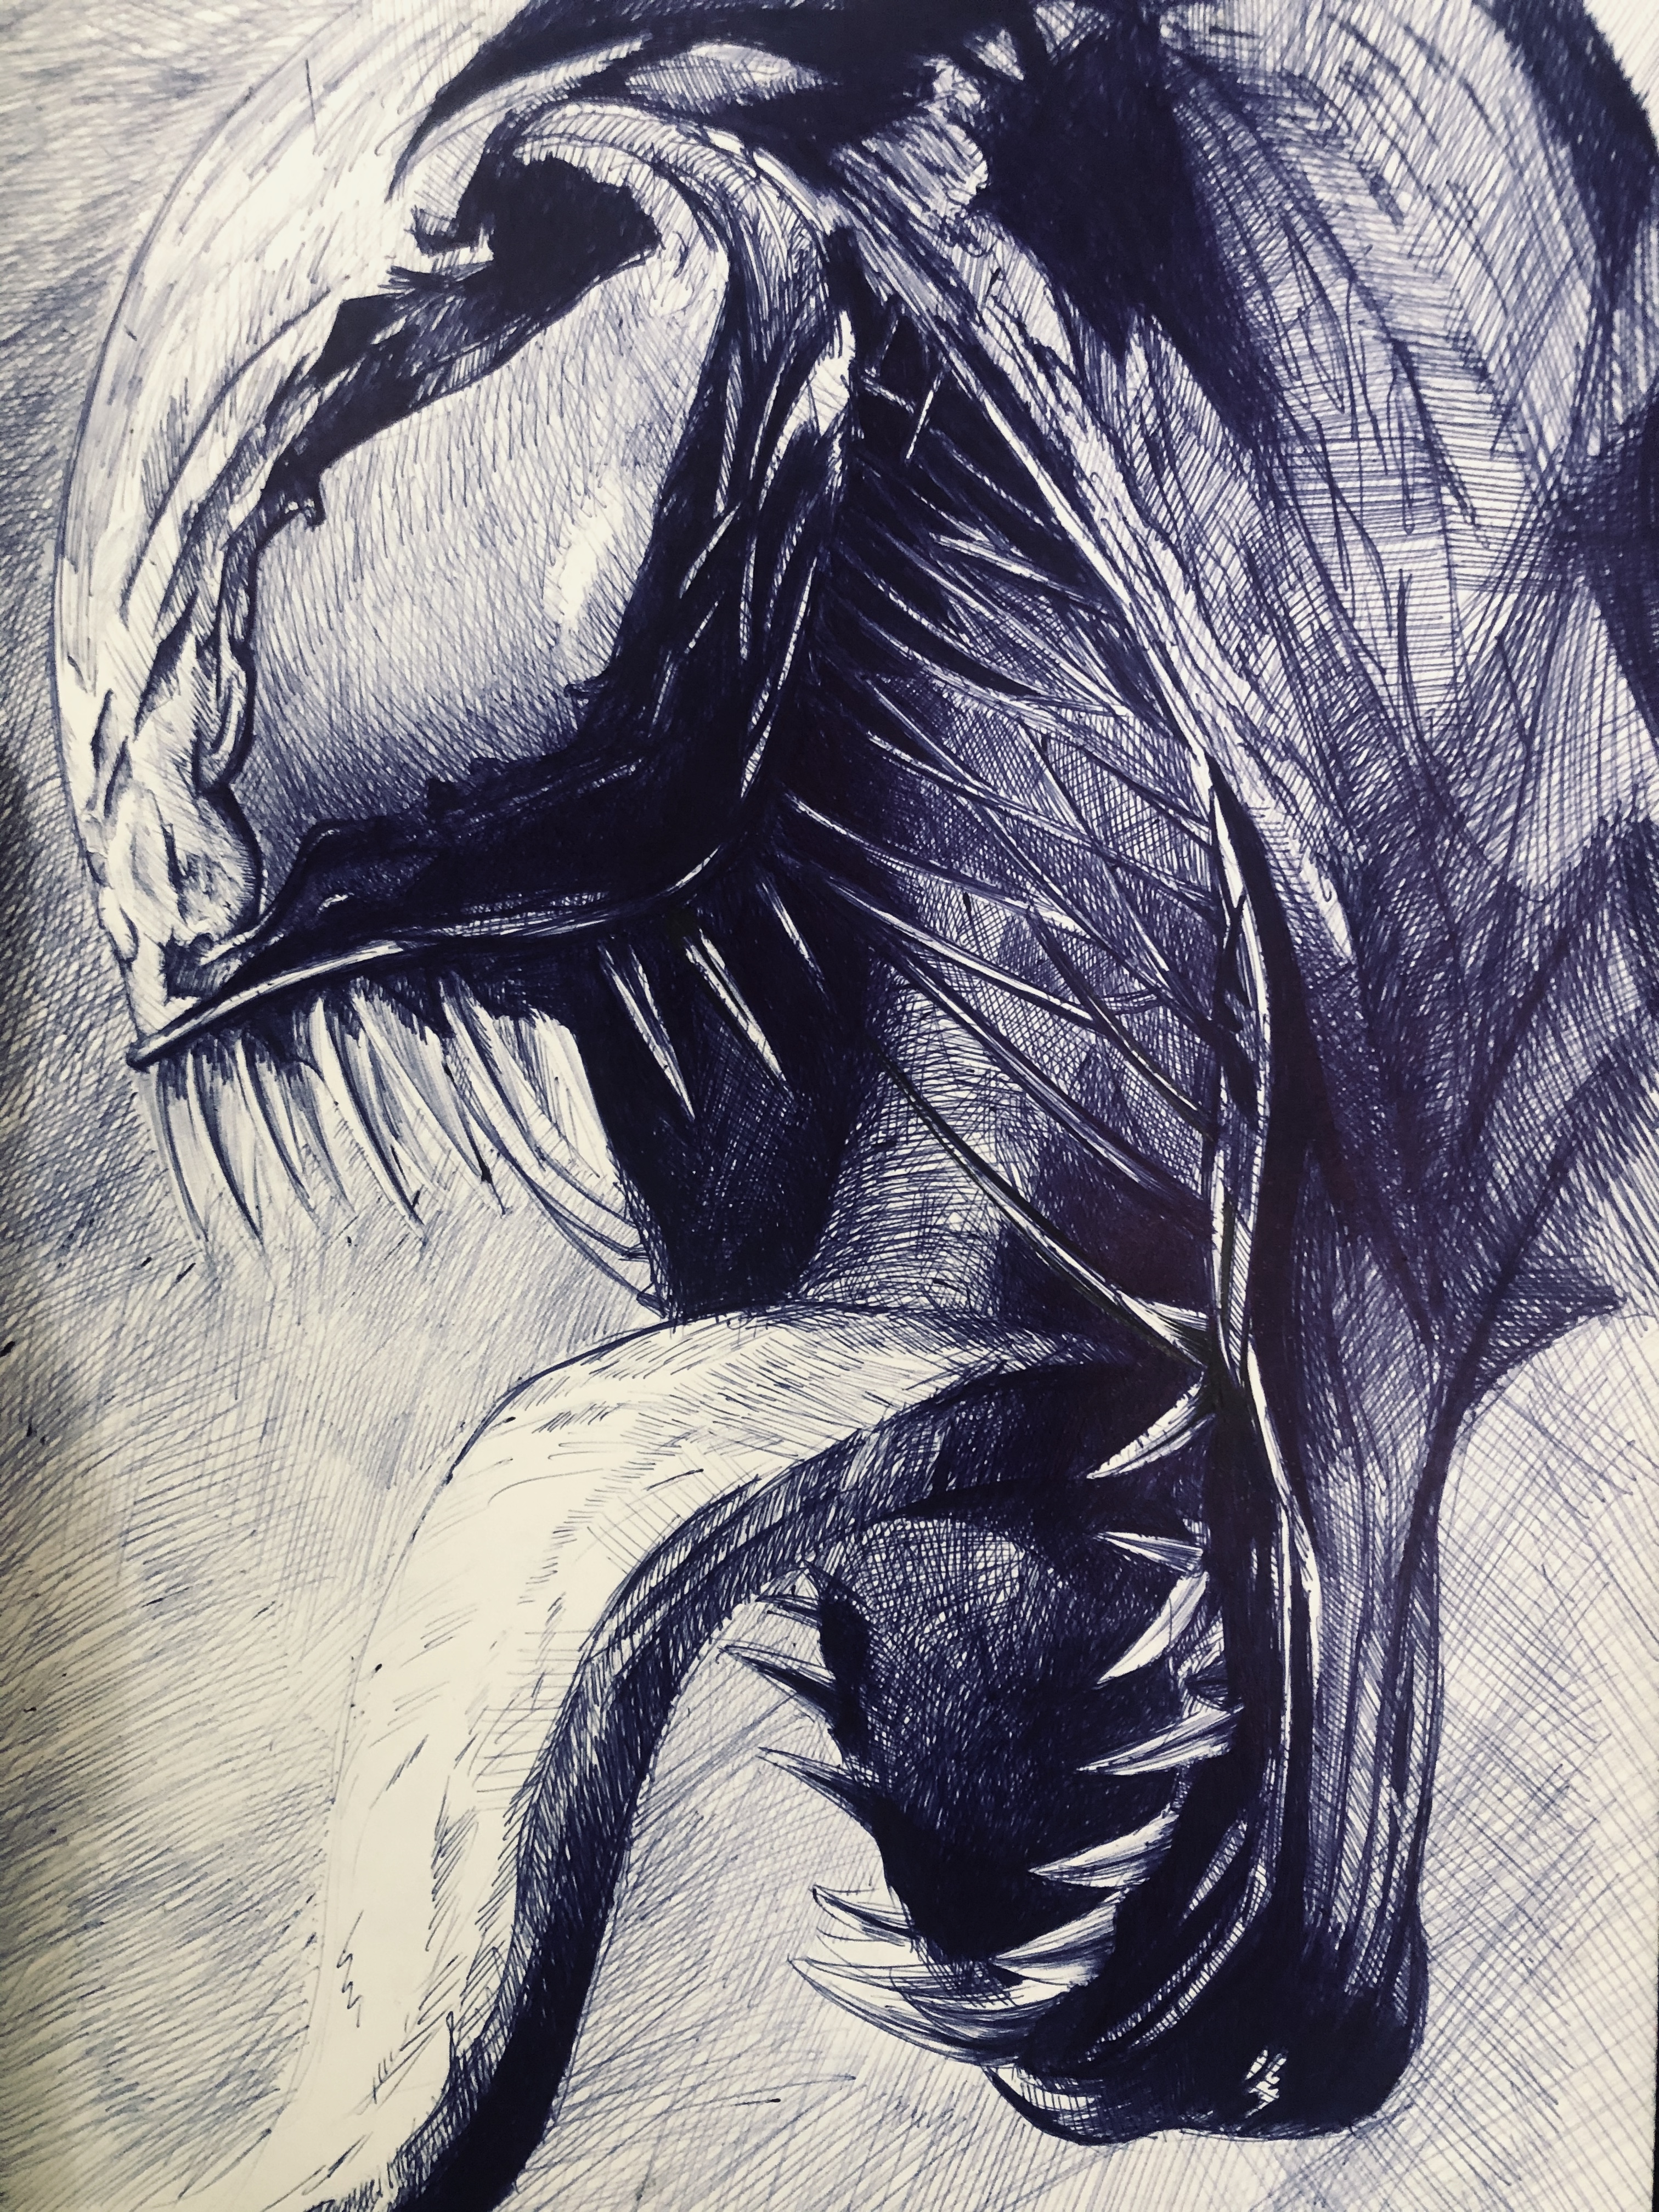 Venom Art by Iongherbovitan